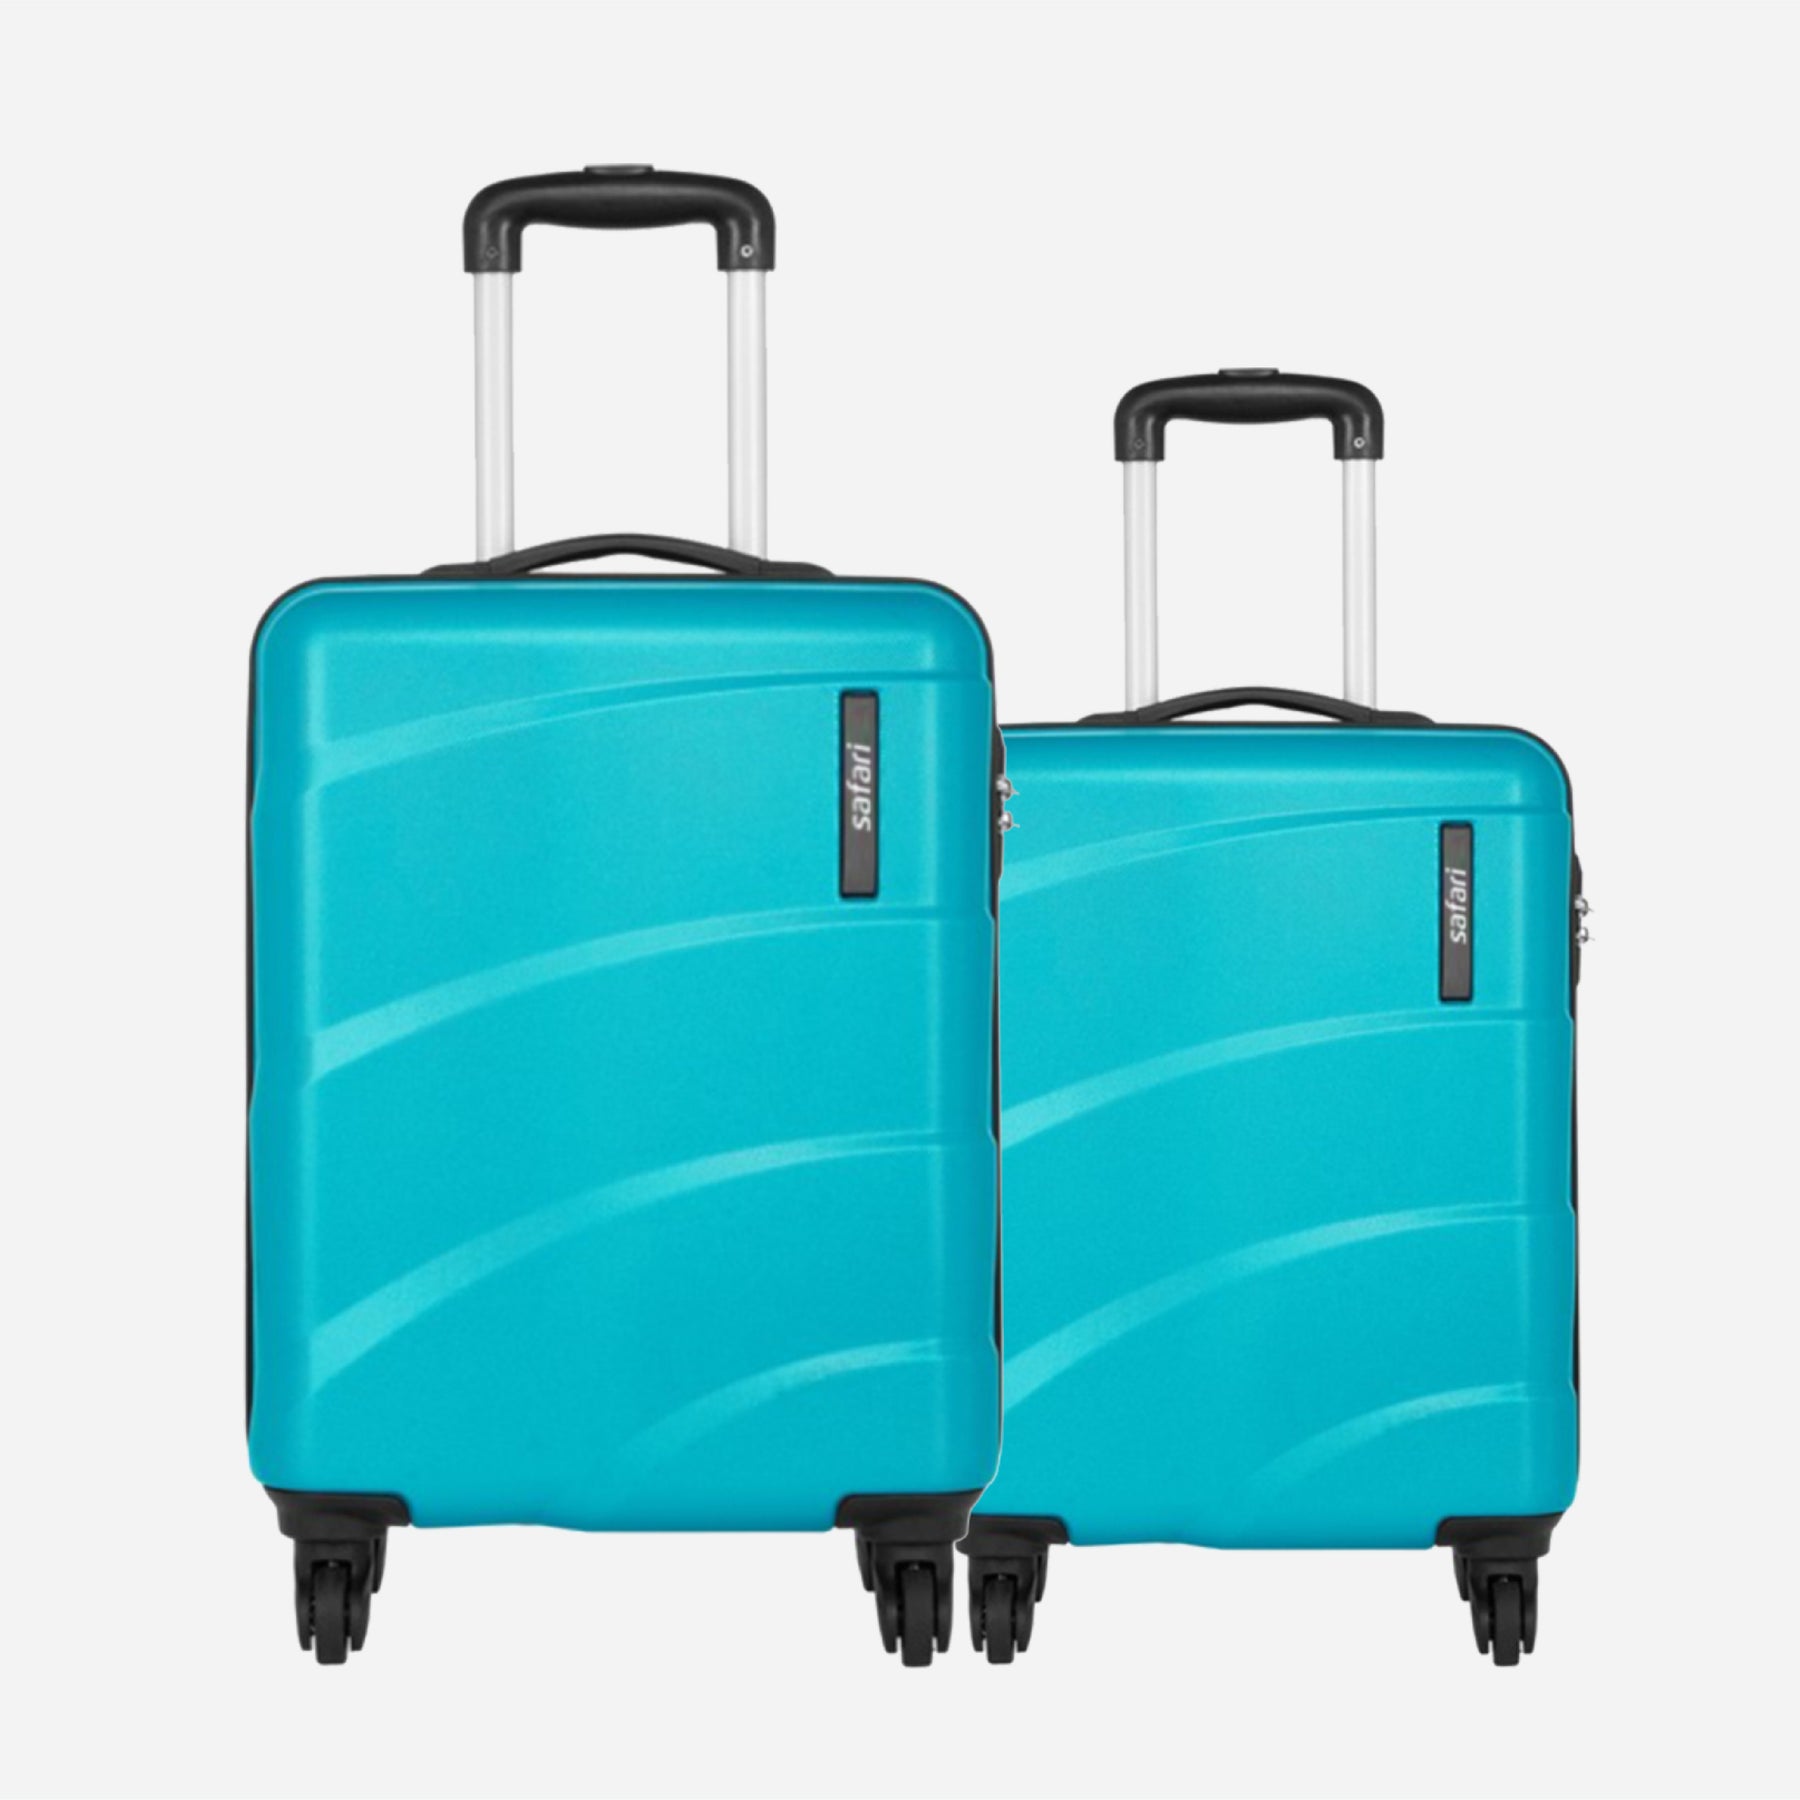 Sway Hard Luggage Combo Set (Small and Medium) - Cyan